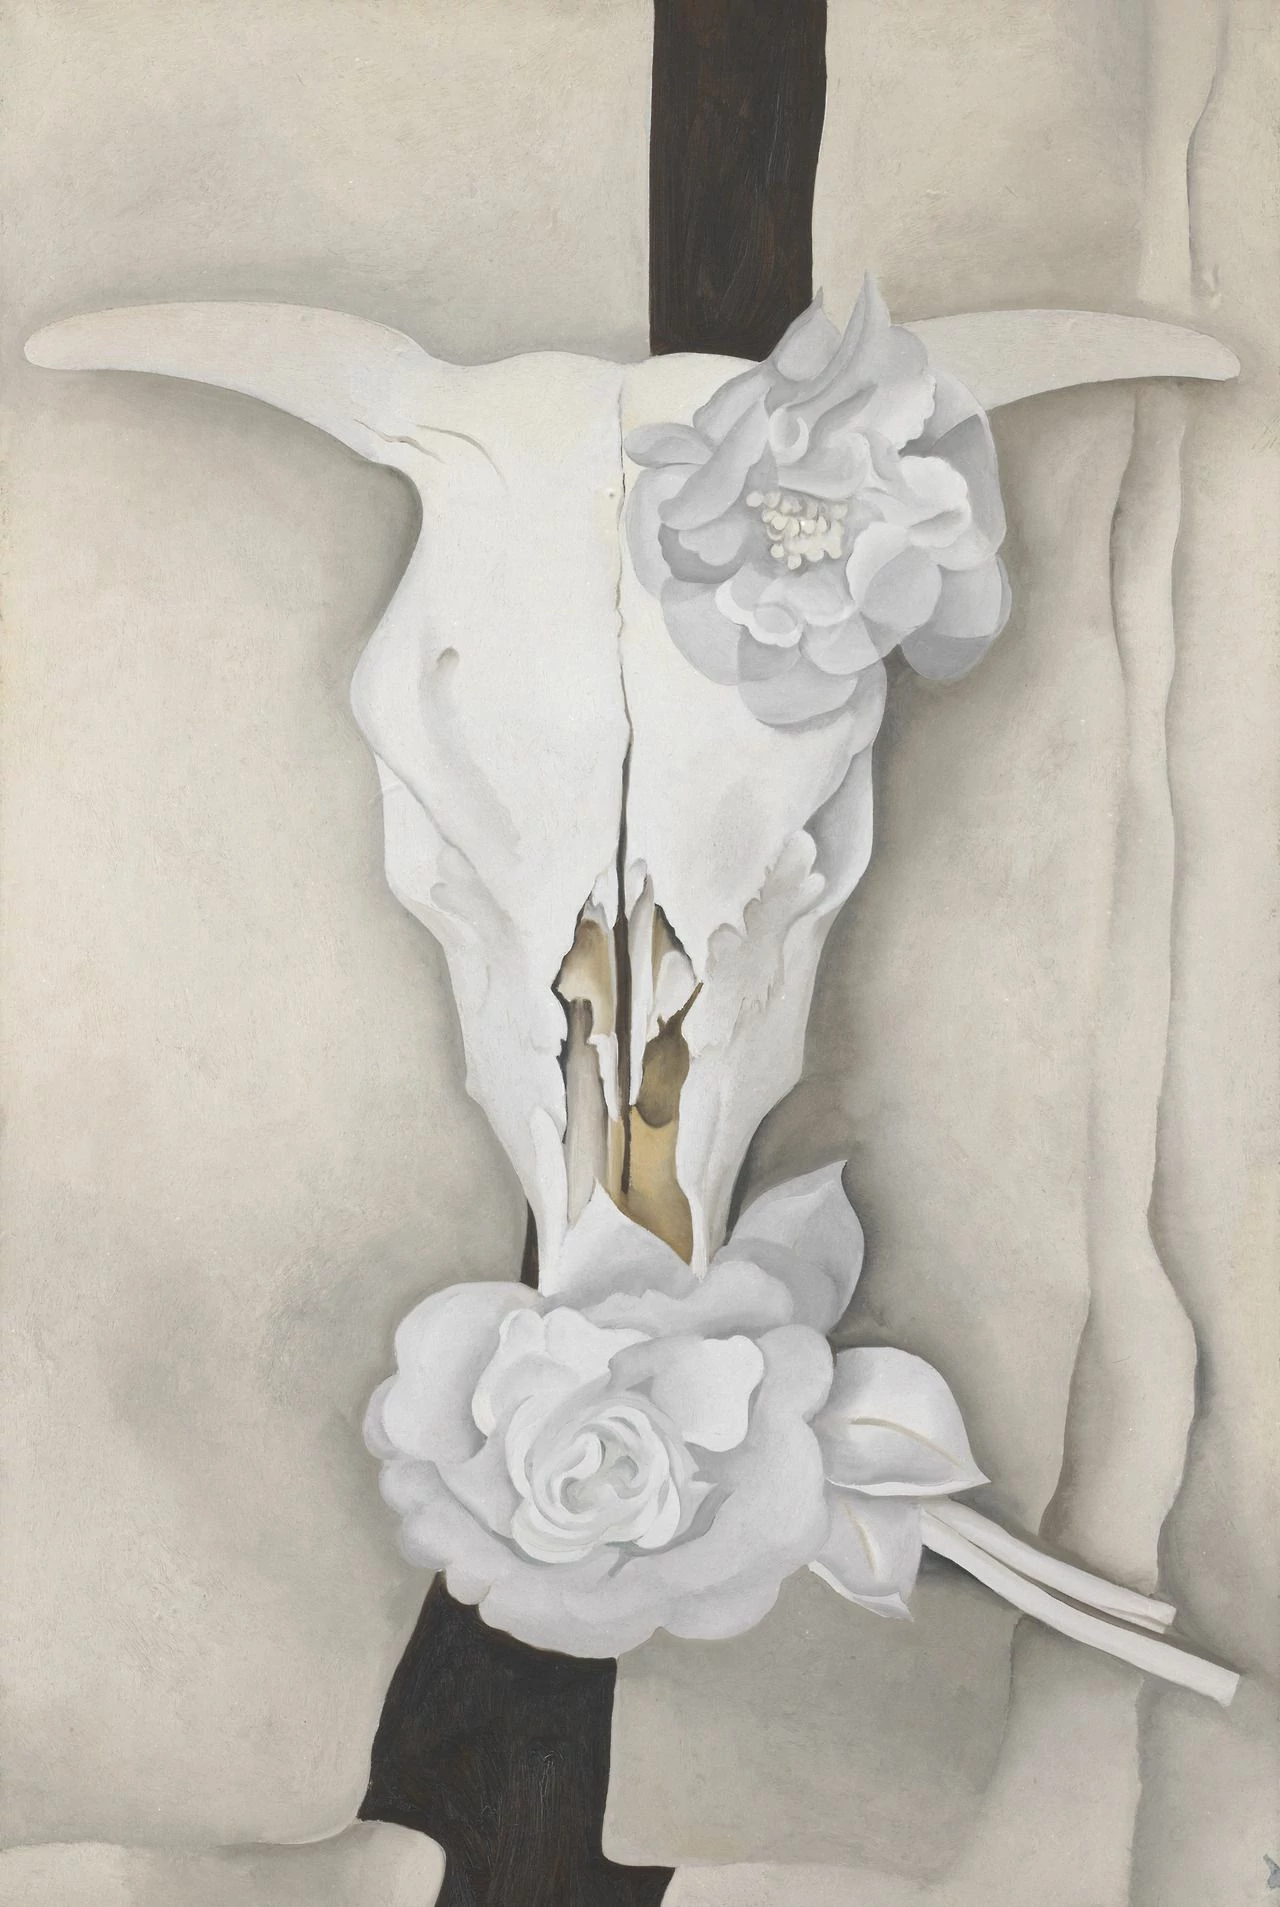 Cow's Skull with Calico Roses, Georgia O'Keeffe